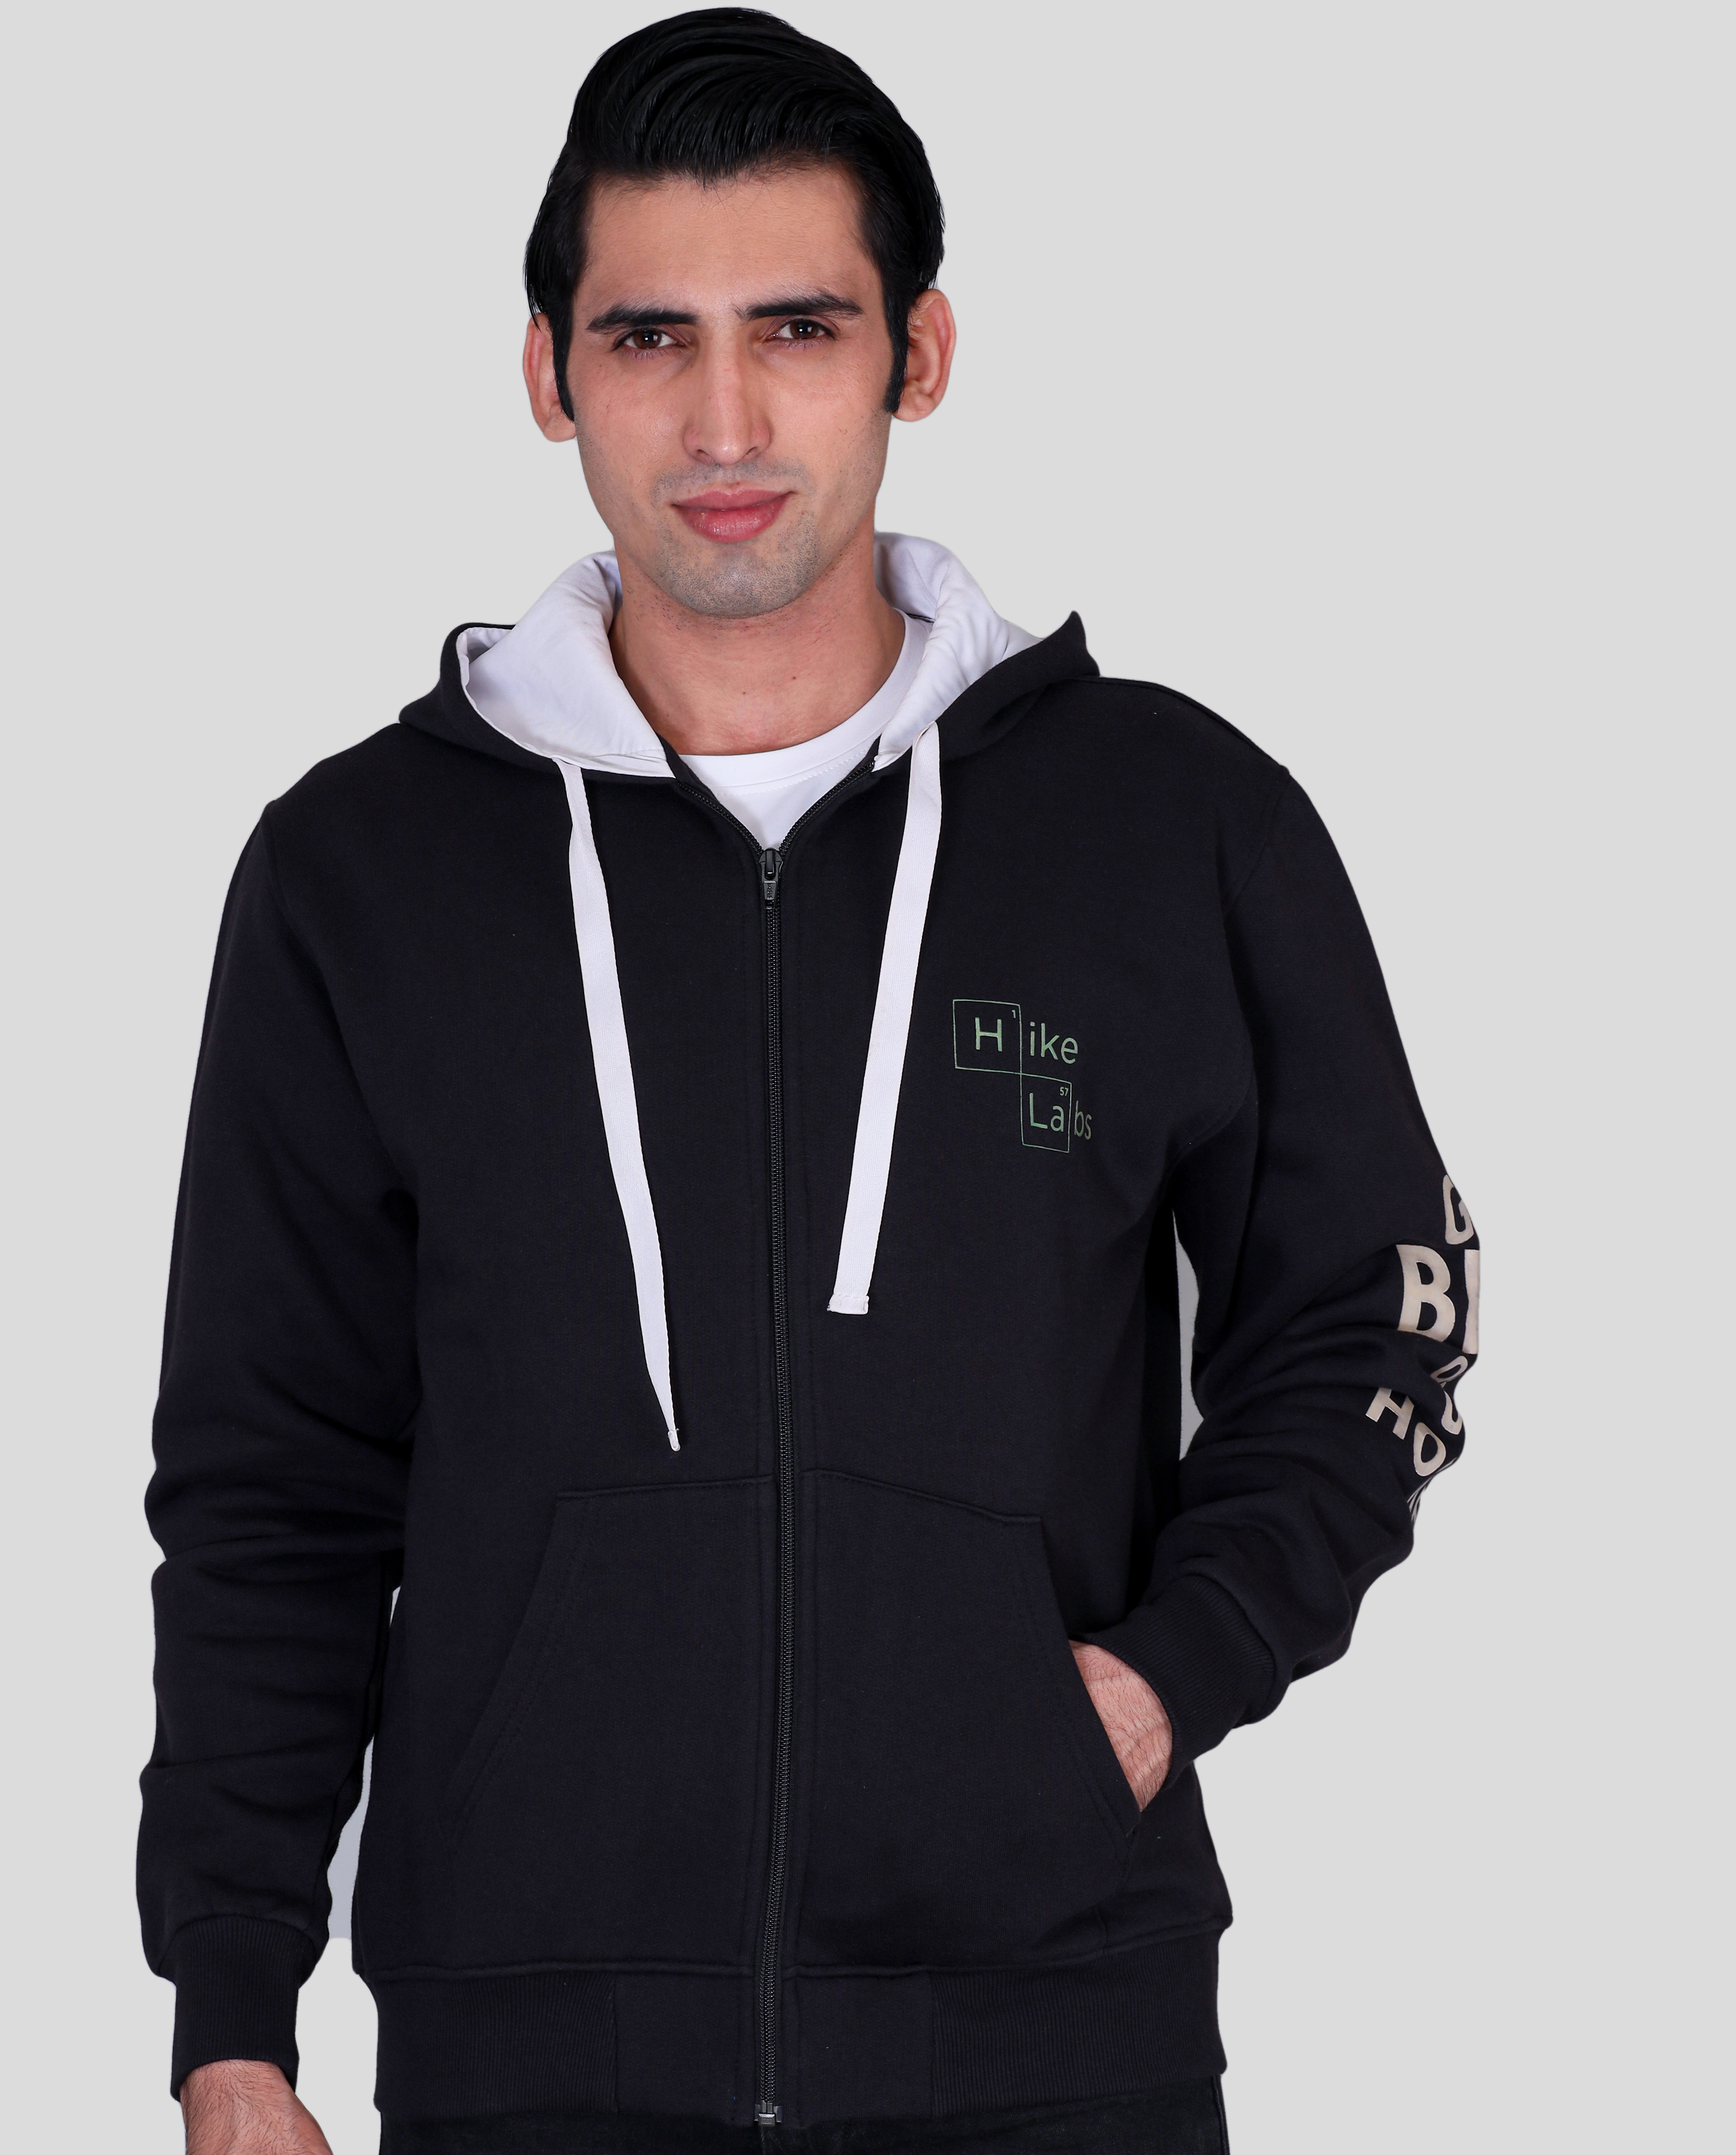 Customize sweatshirts manufacturer in delhi